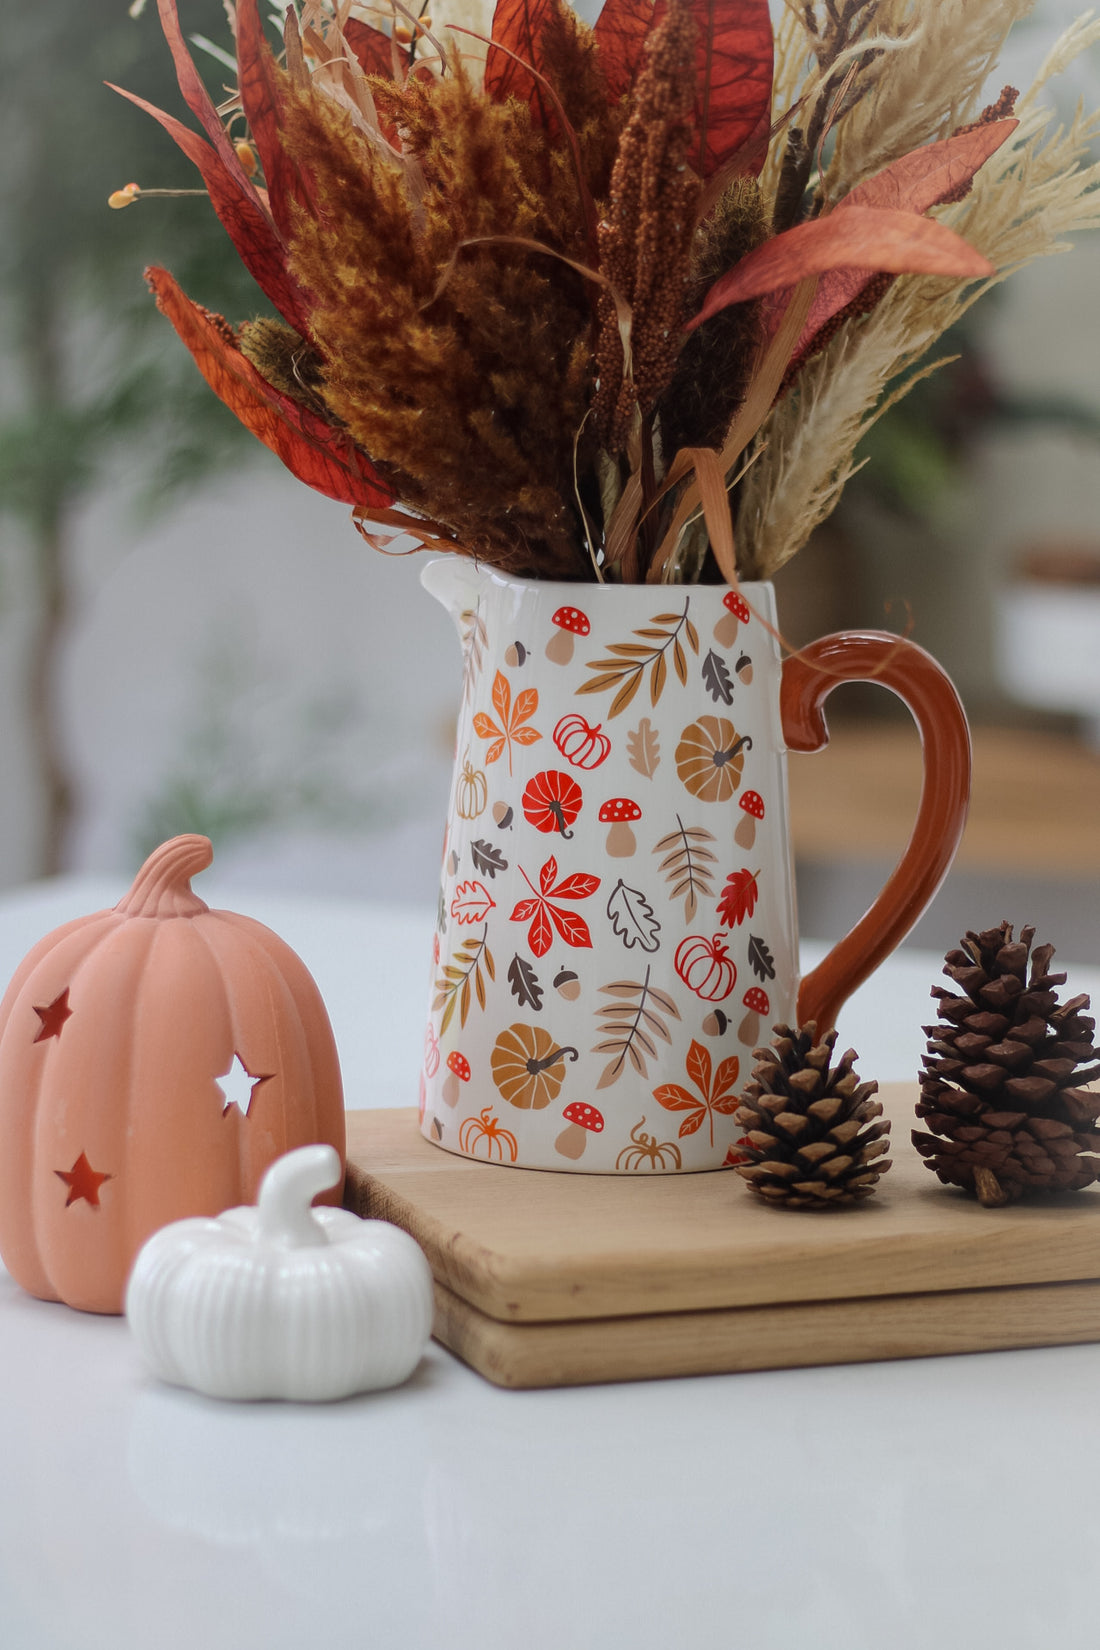 Autumn Pumpkins and Leaves Ceramic Jug